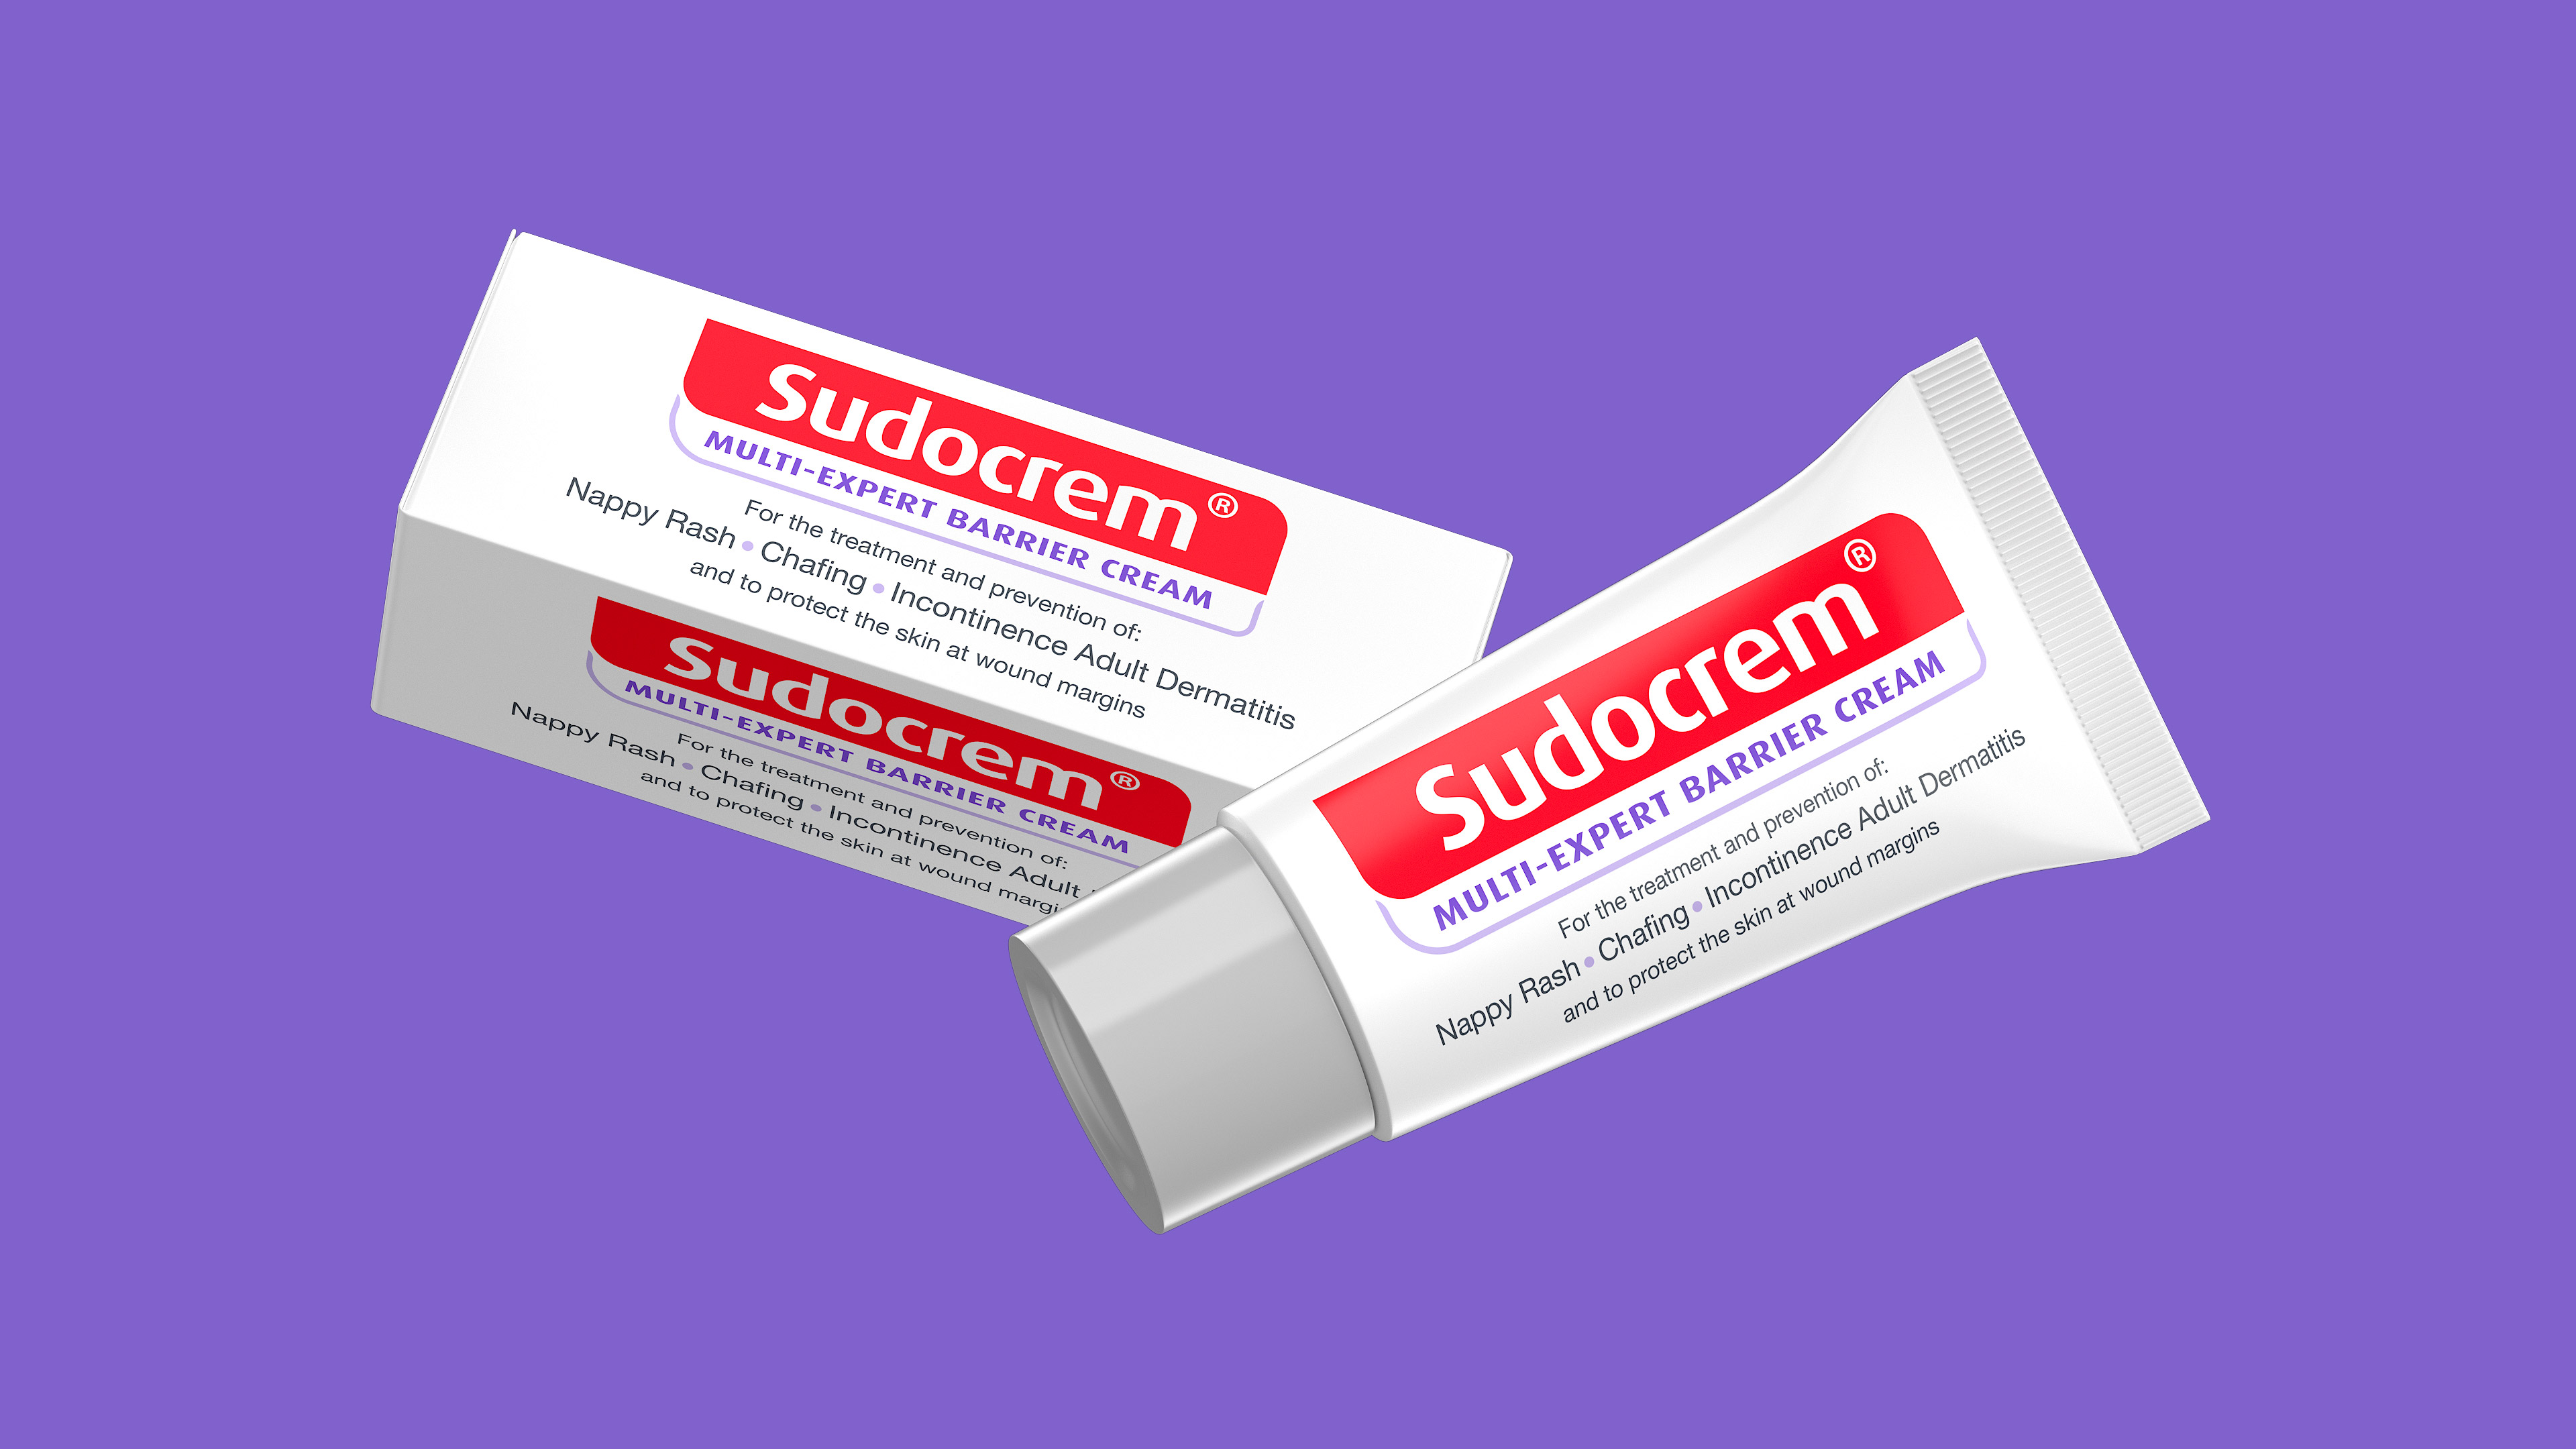 Sudocrem tube and carton